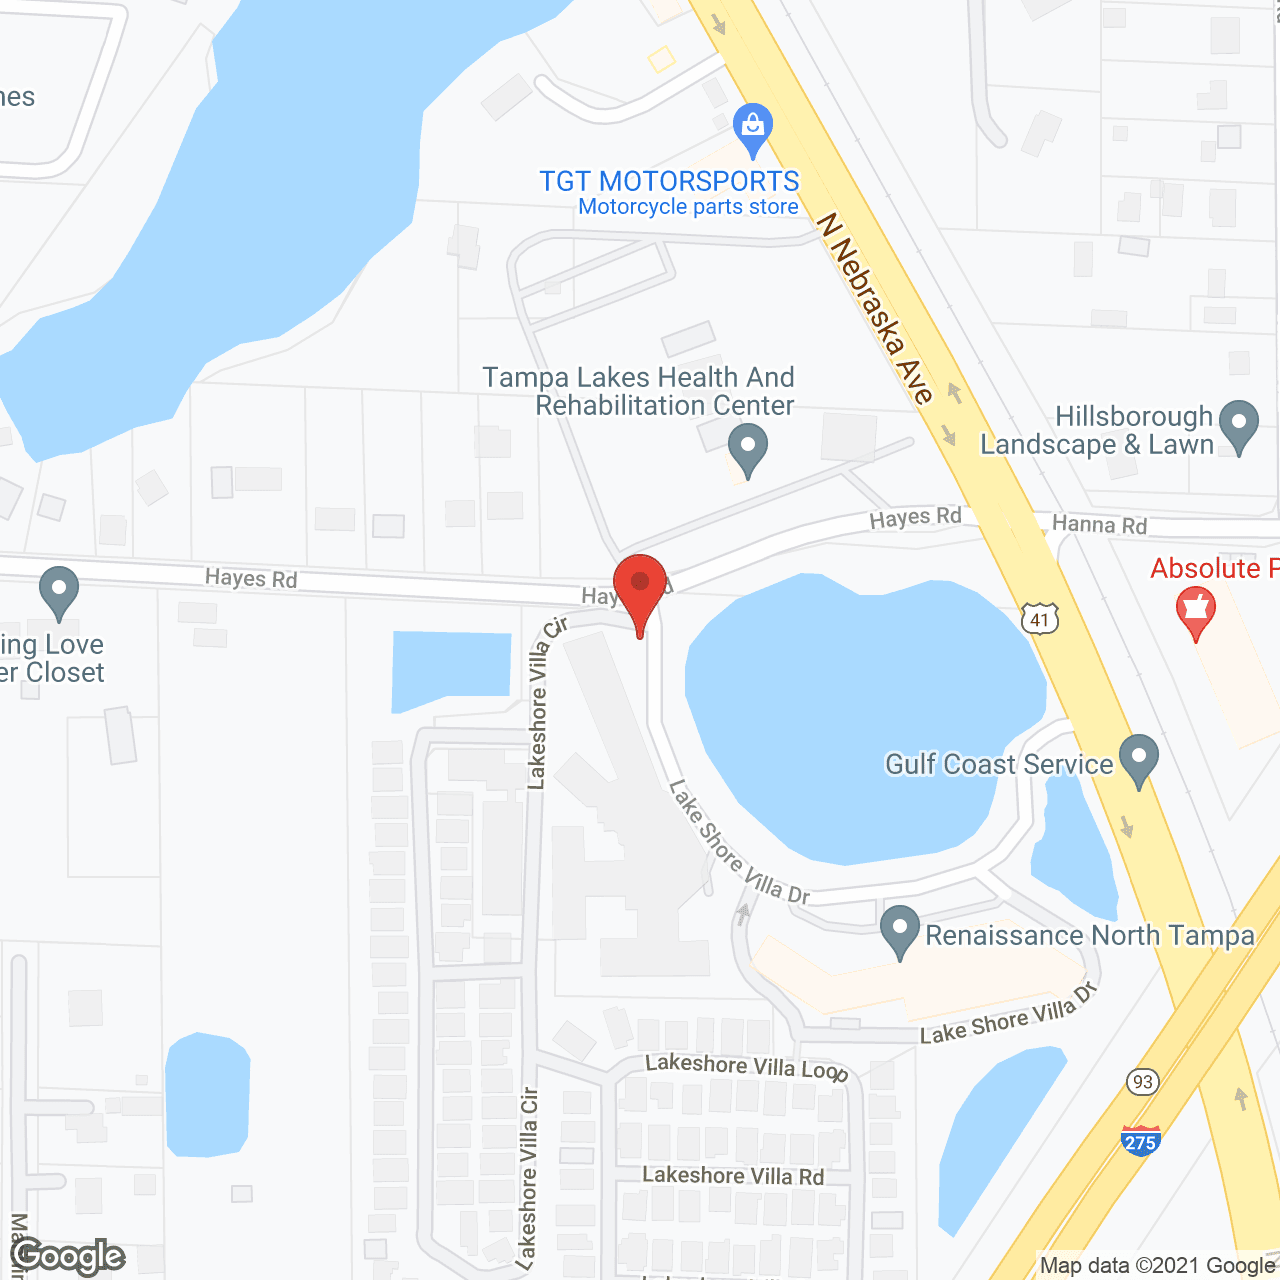 Renaissance North Tampa in google map